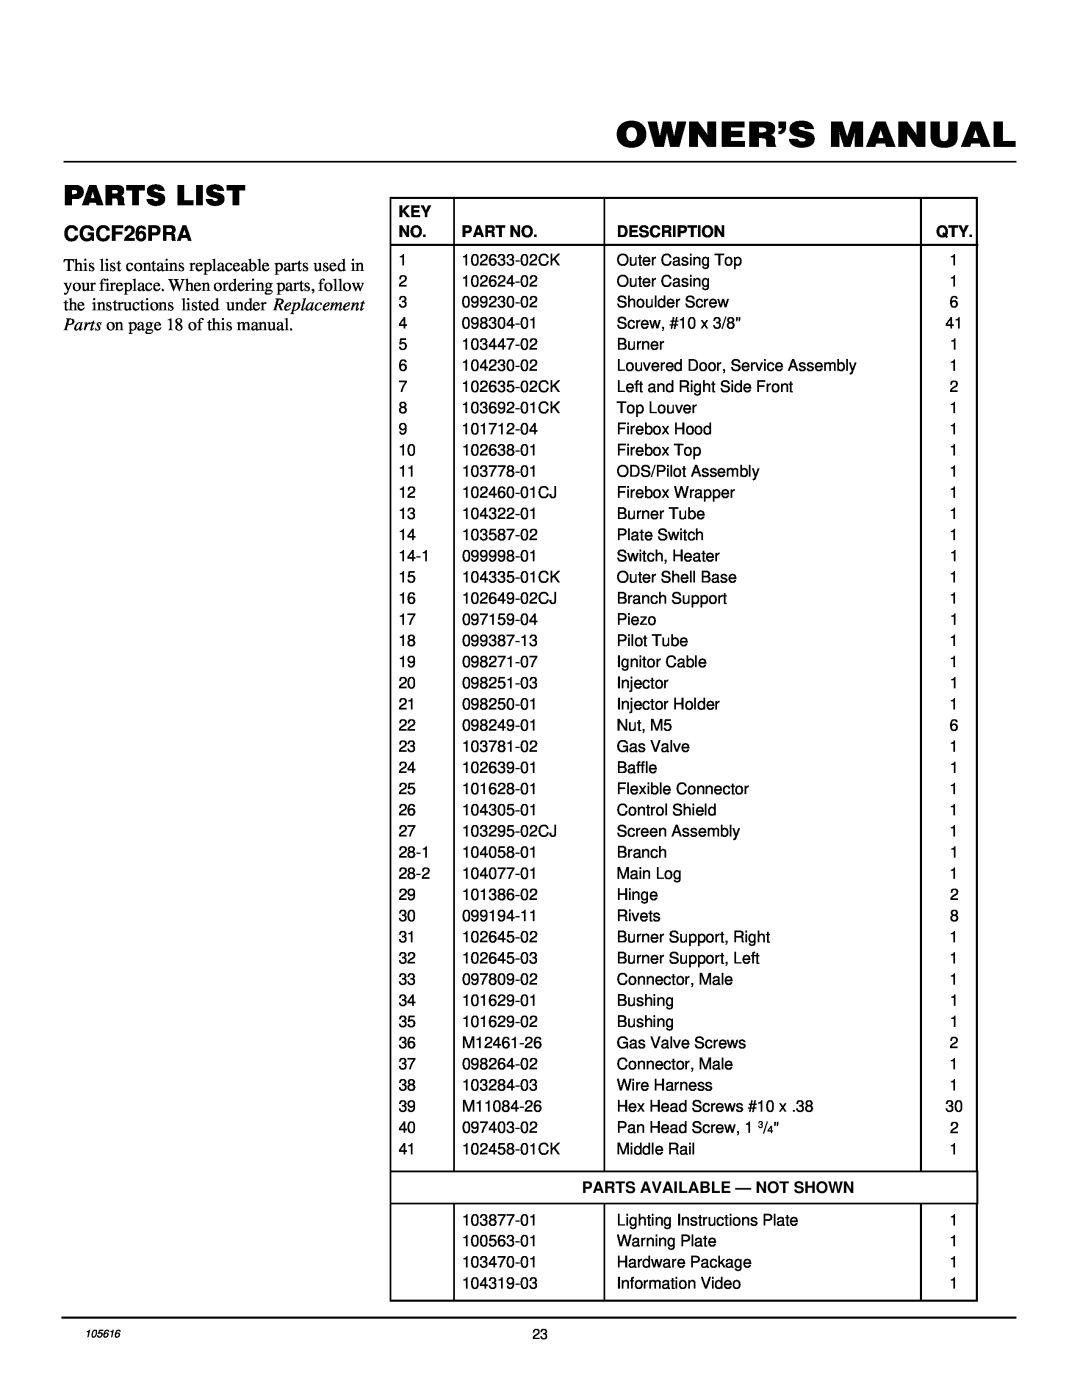 Desa CGCF26PRA installation manual Parts List, Description, Parts Available - Not Shown 